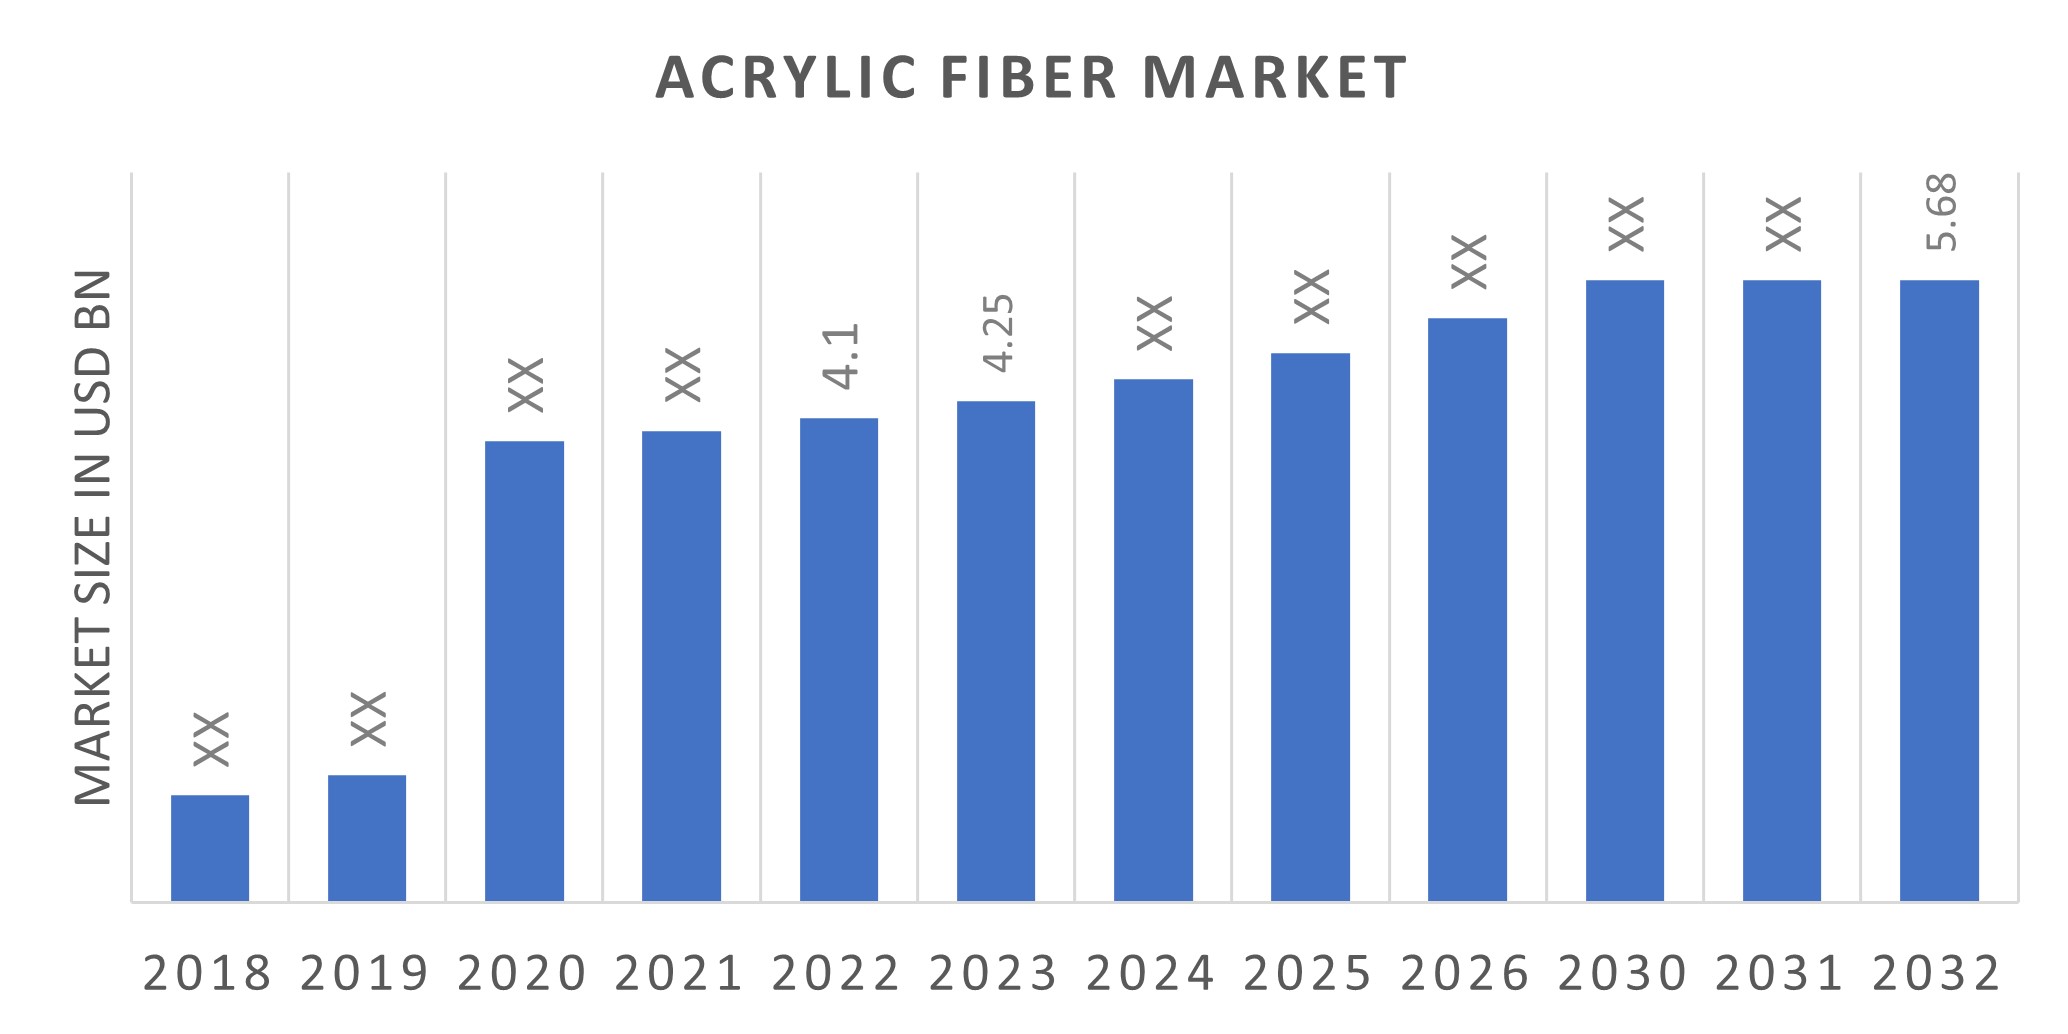 Global Acrylic Fiber Market